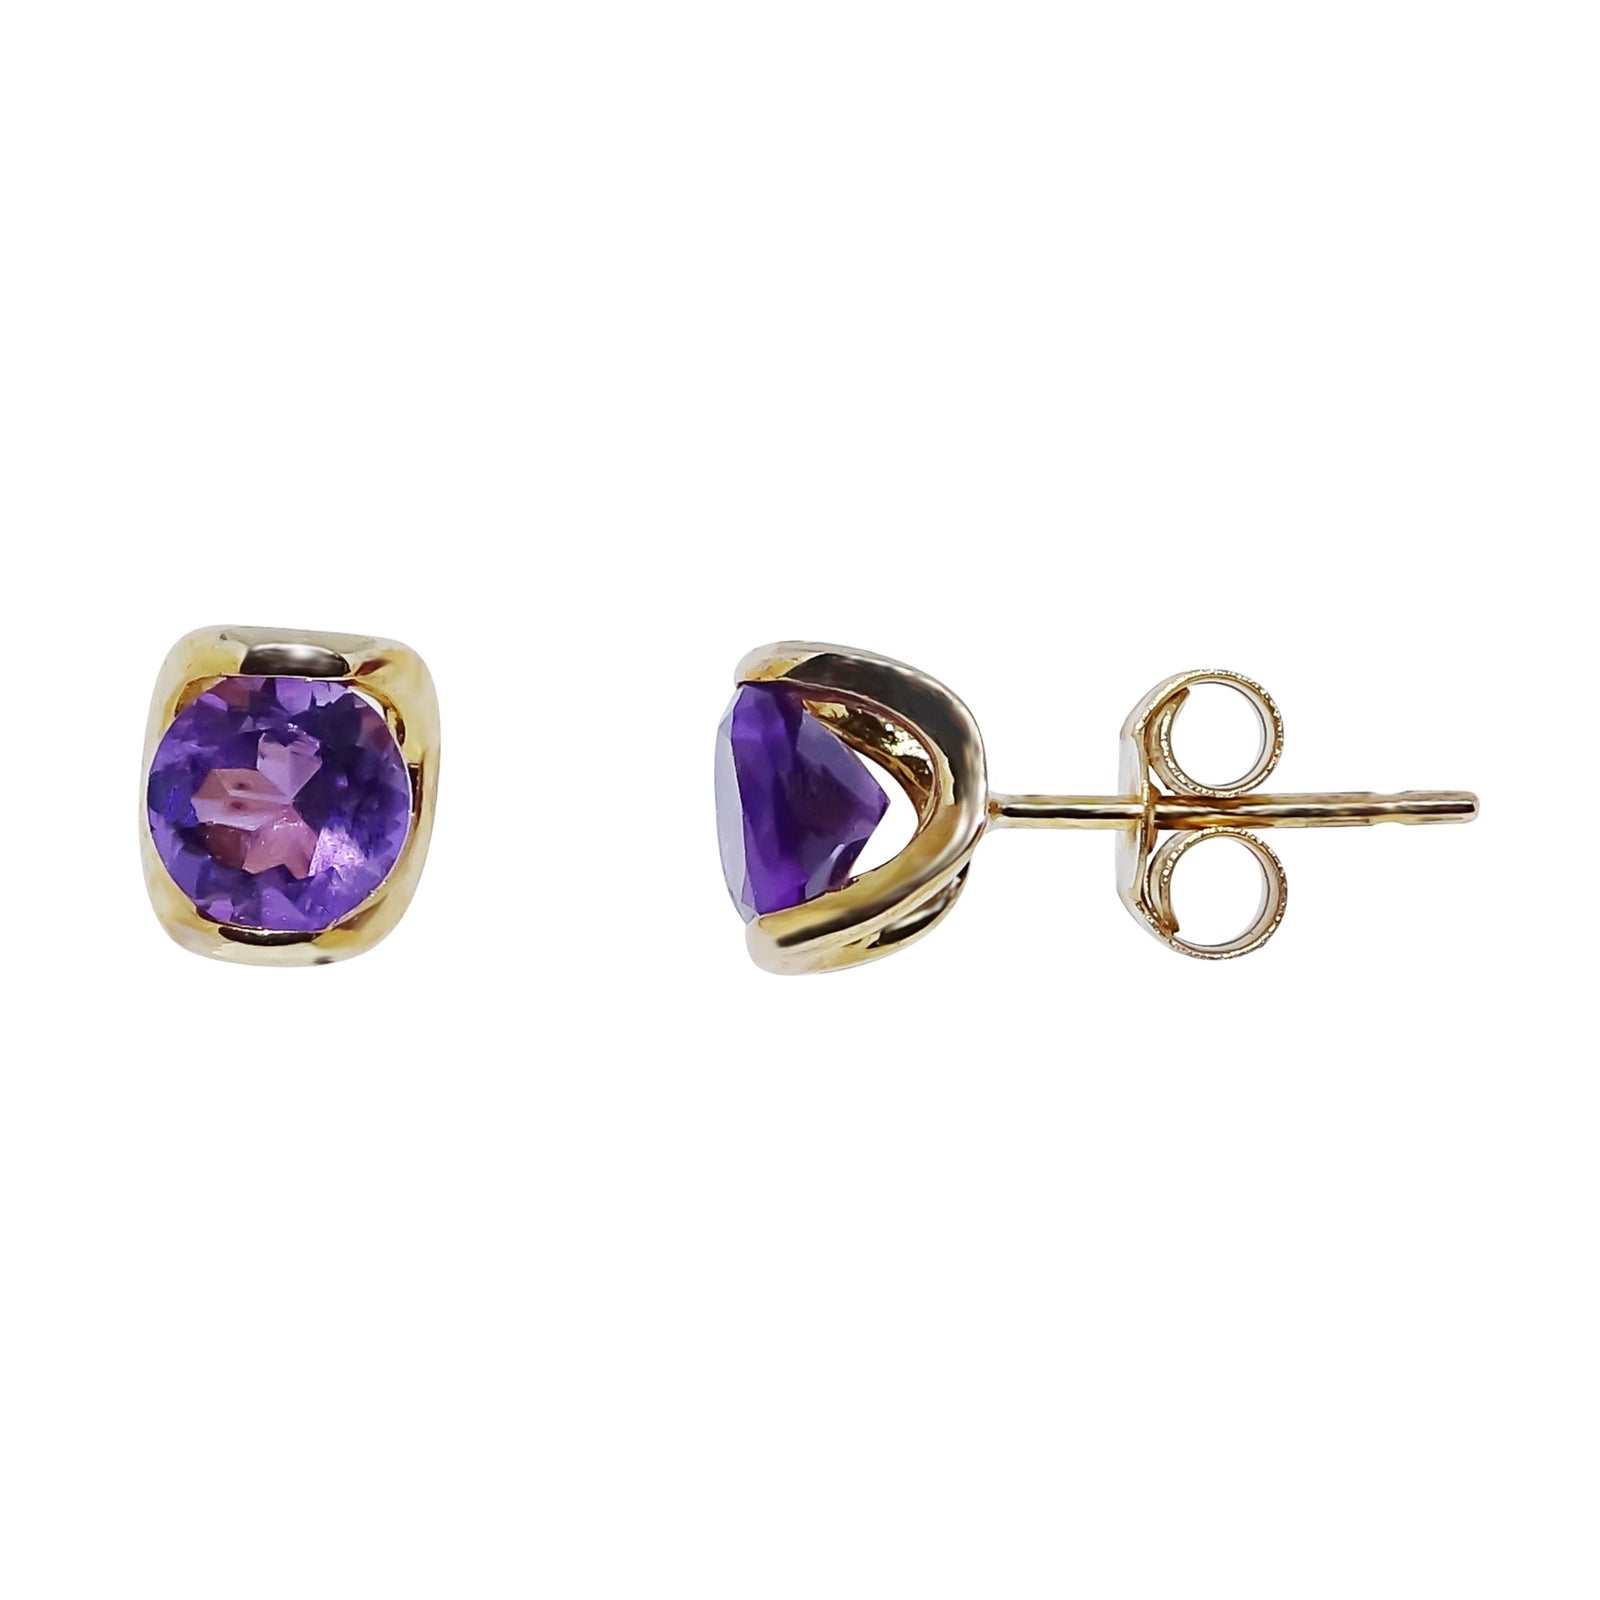 9ct gold 5mm round amethyst stud earrings